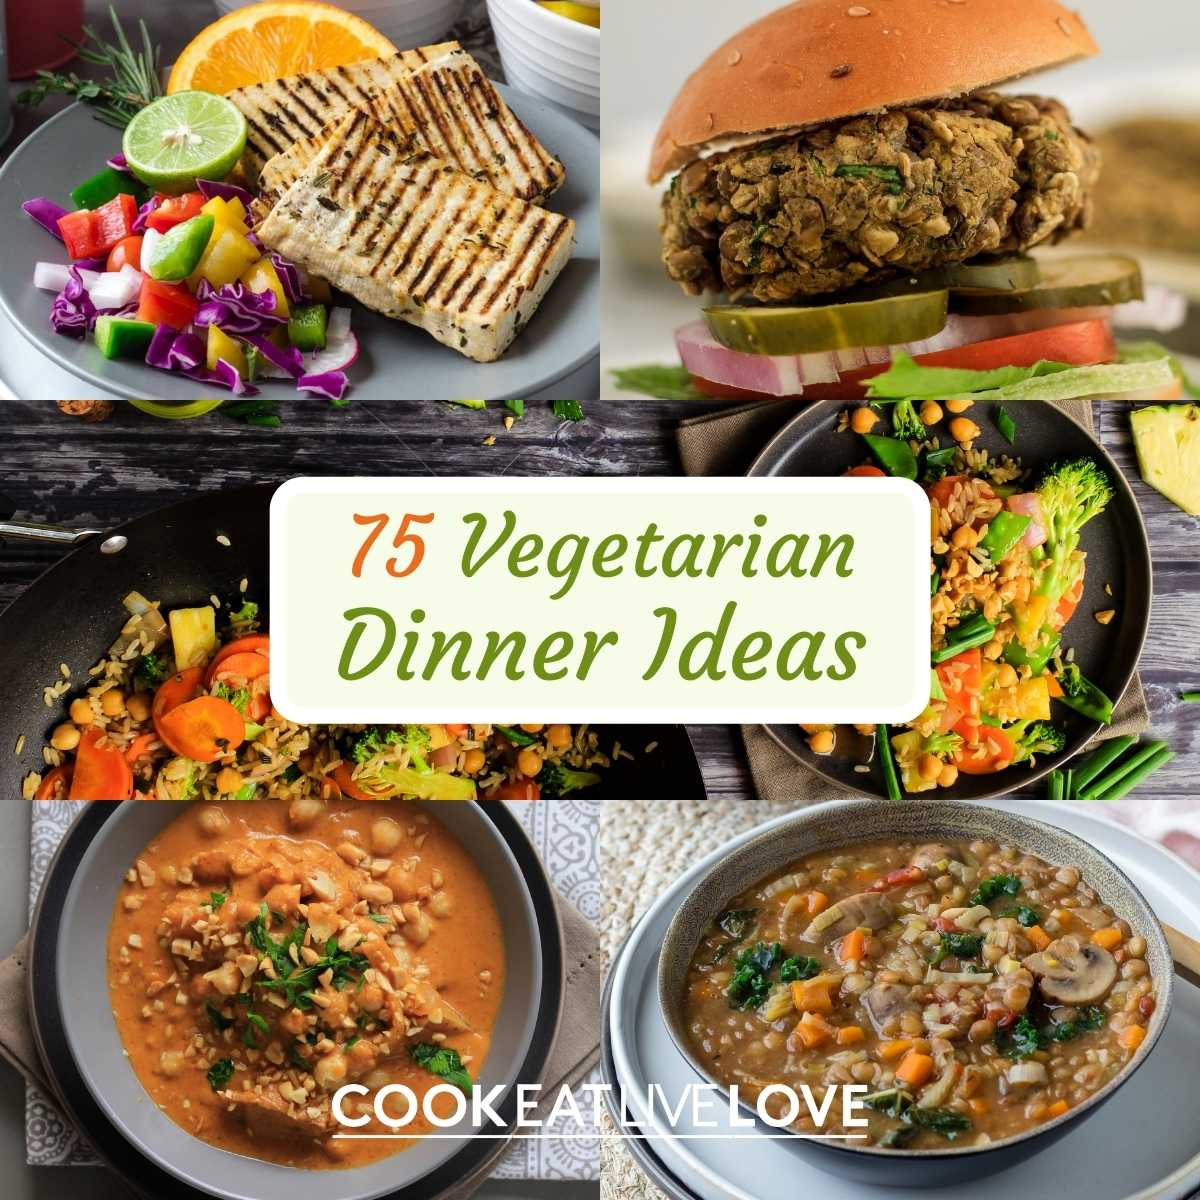 7 Quick Vegetarian Dinner Recipes - Cook Eat Live Love